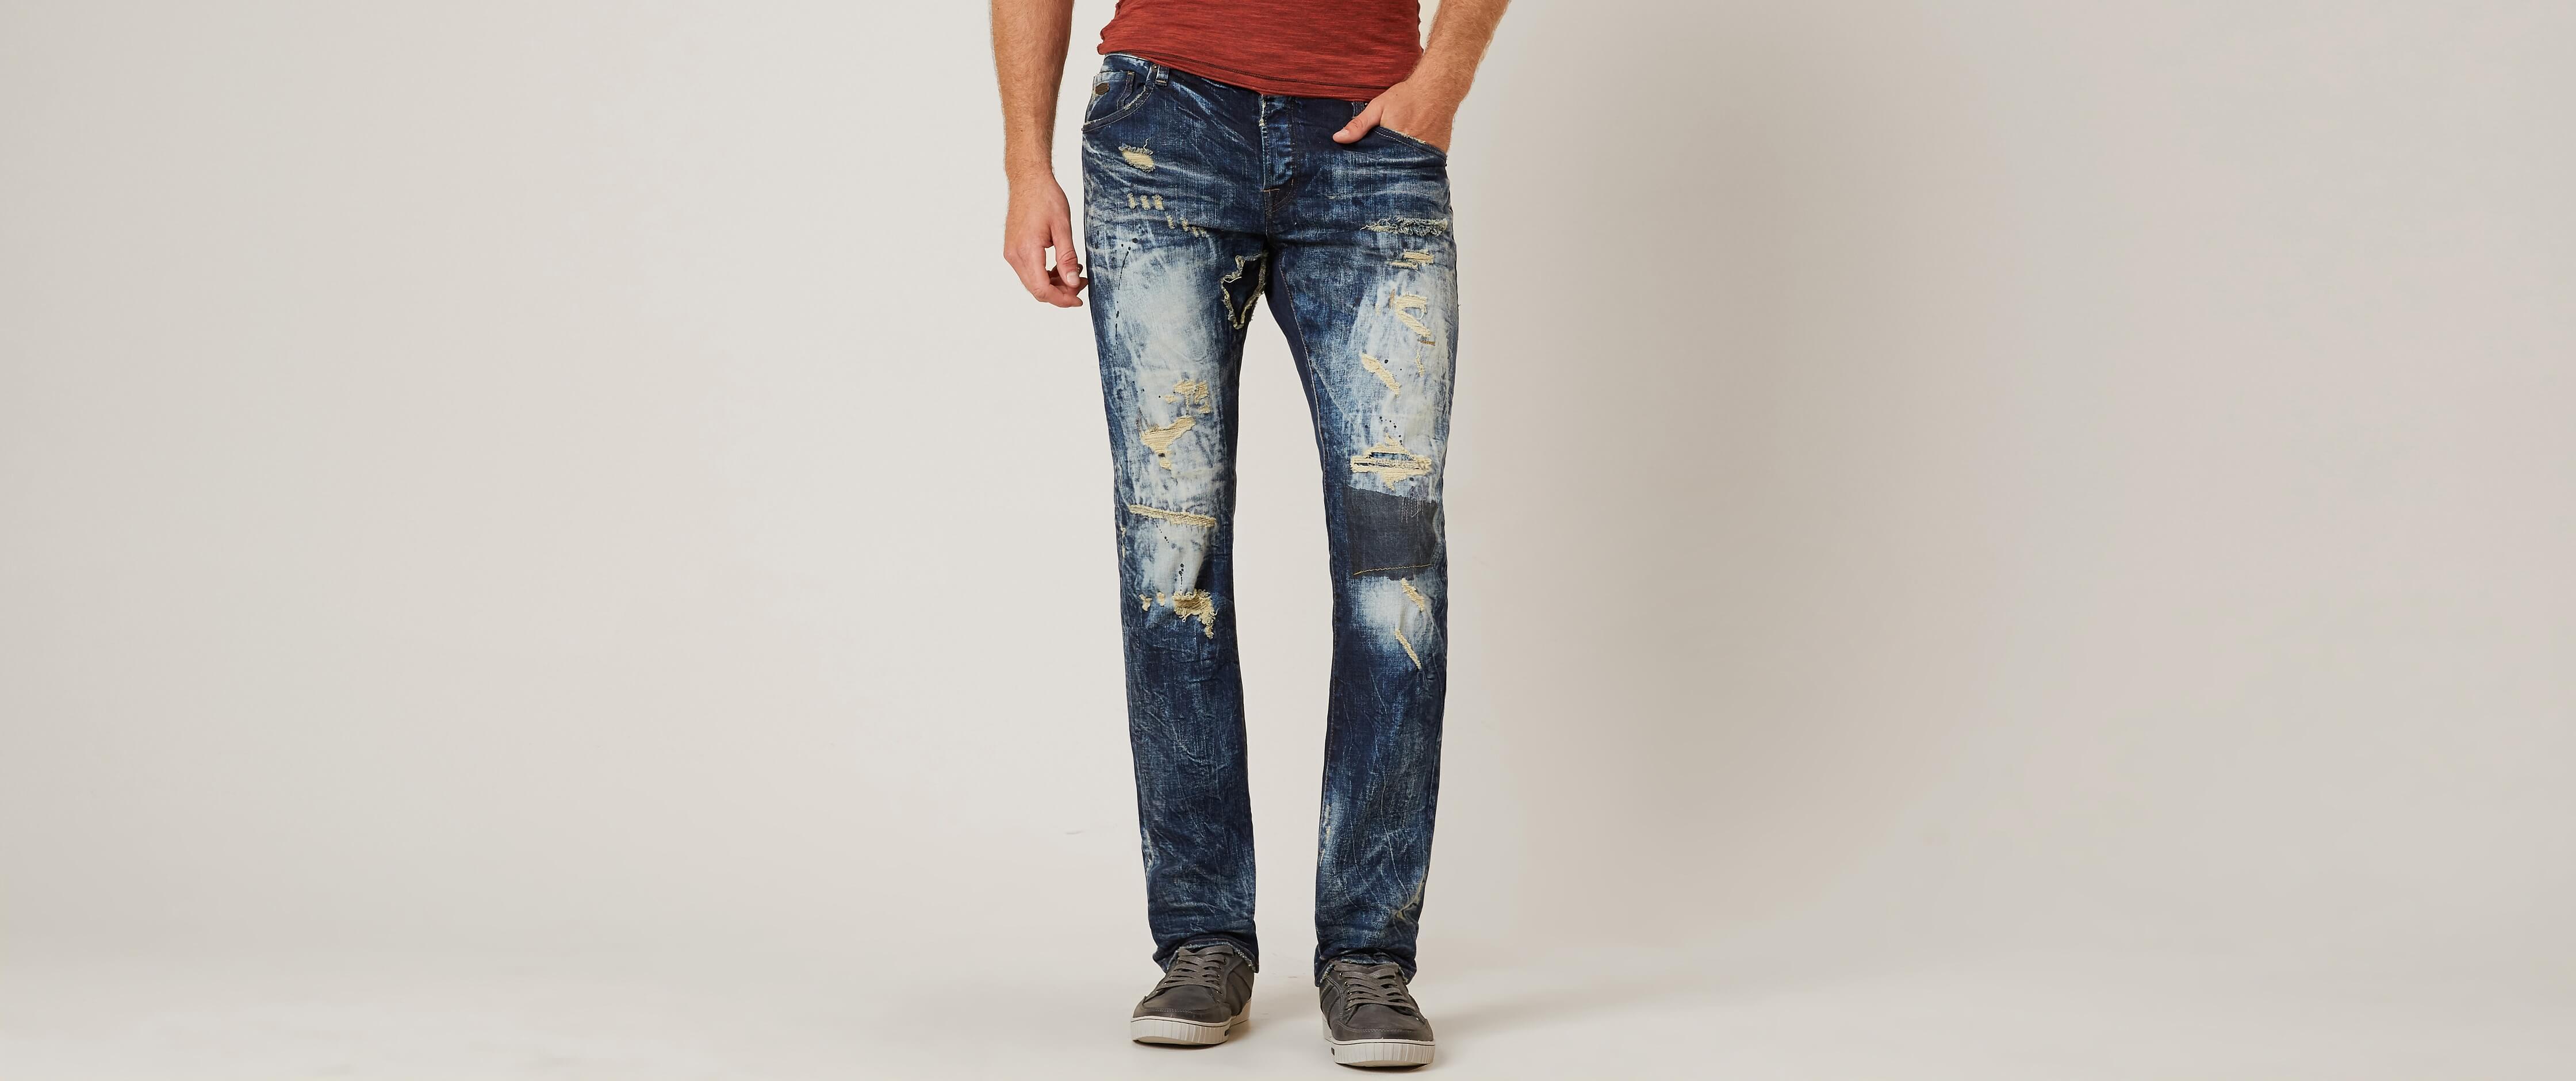 buckaroo jeans vintage